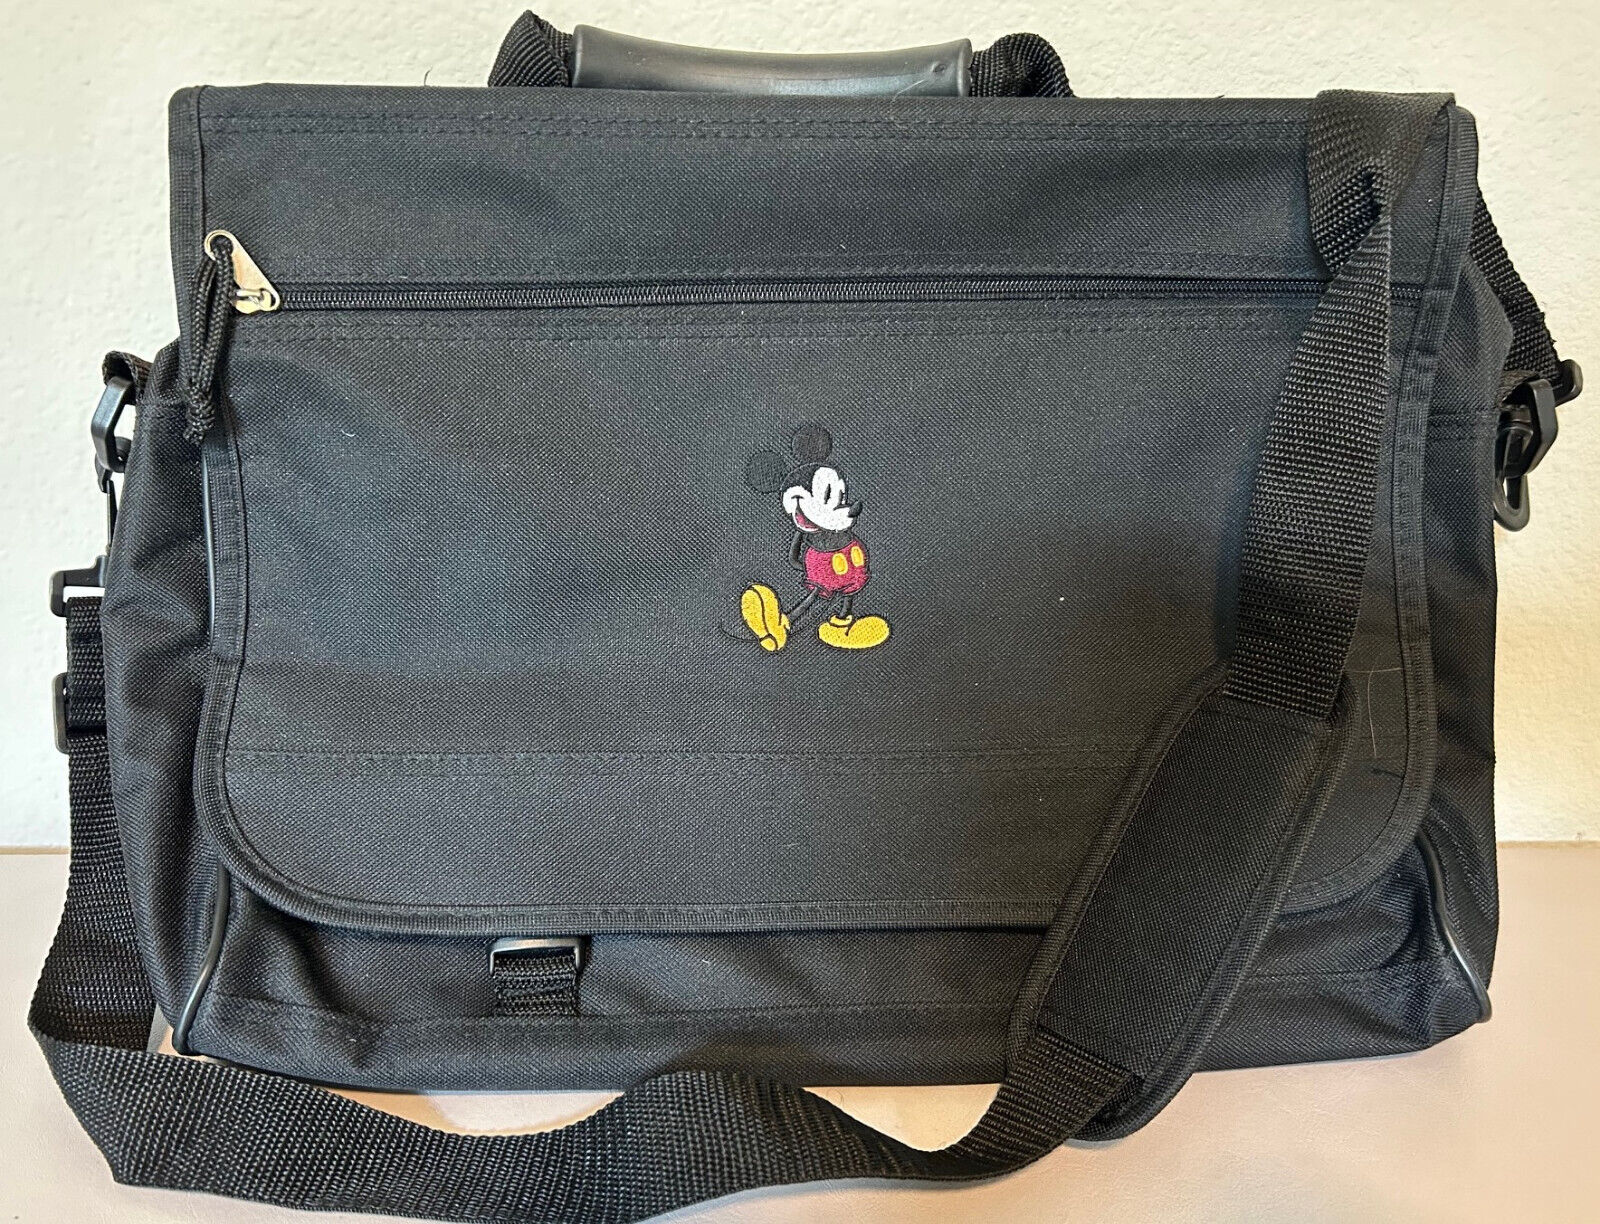 Disney Store MICKEY MOUSE Laptop / Computer / Messenger Bag - Black